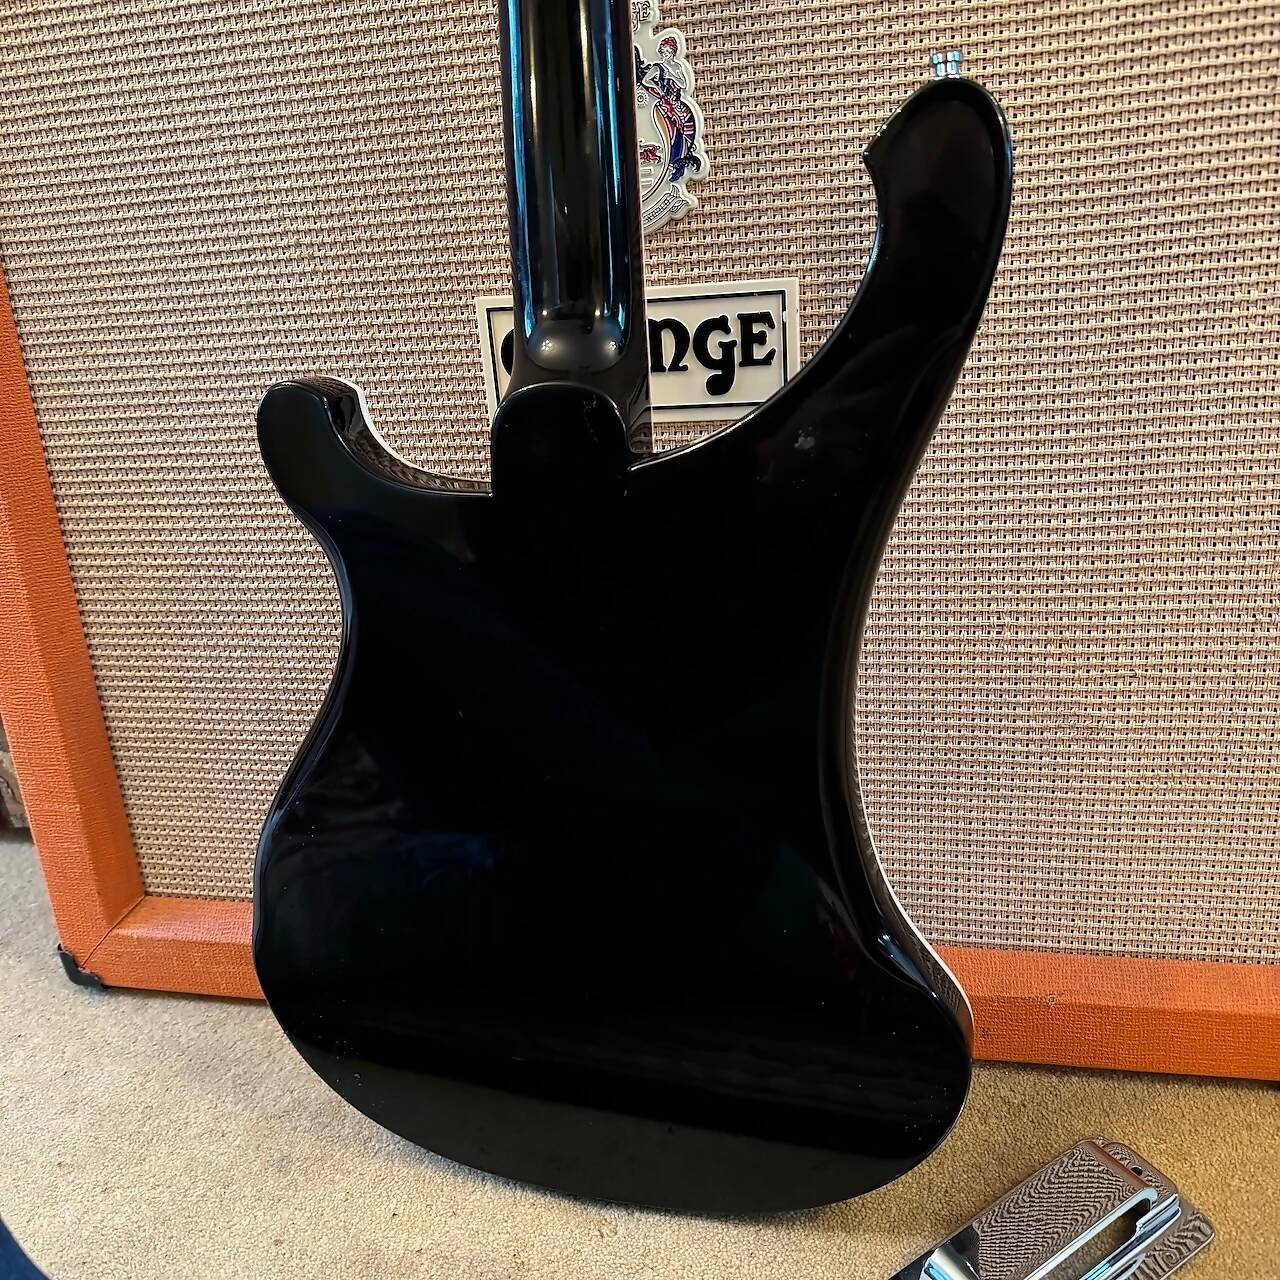 2003 Rickenbacker 4001 Black Jetglo USA 4-String Bass Guitar w/ Flight Case